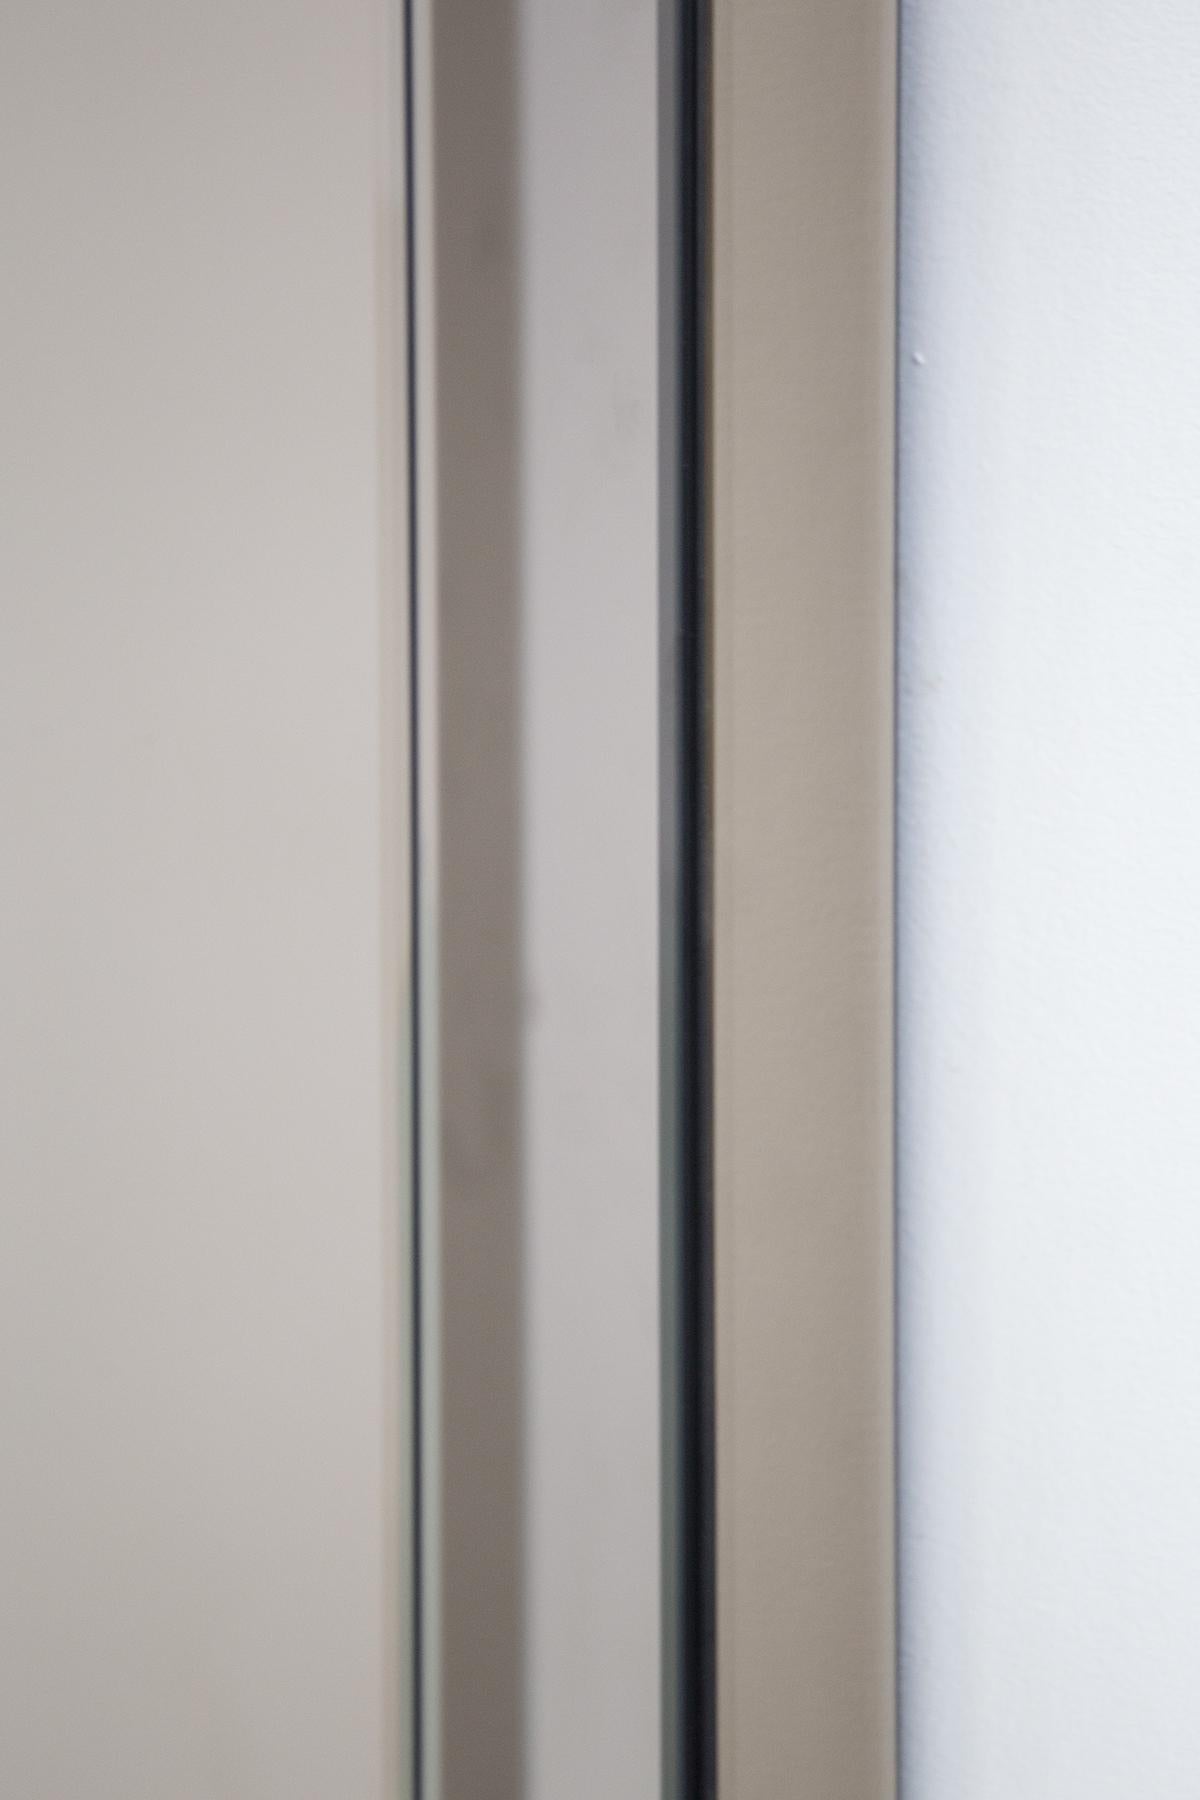 Italian Roberto Cavalli Wall Mirror in Fumè Glass, Original Label